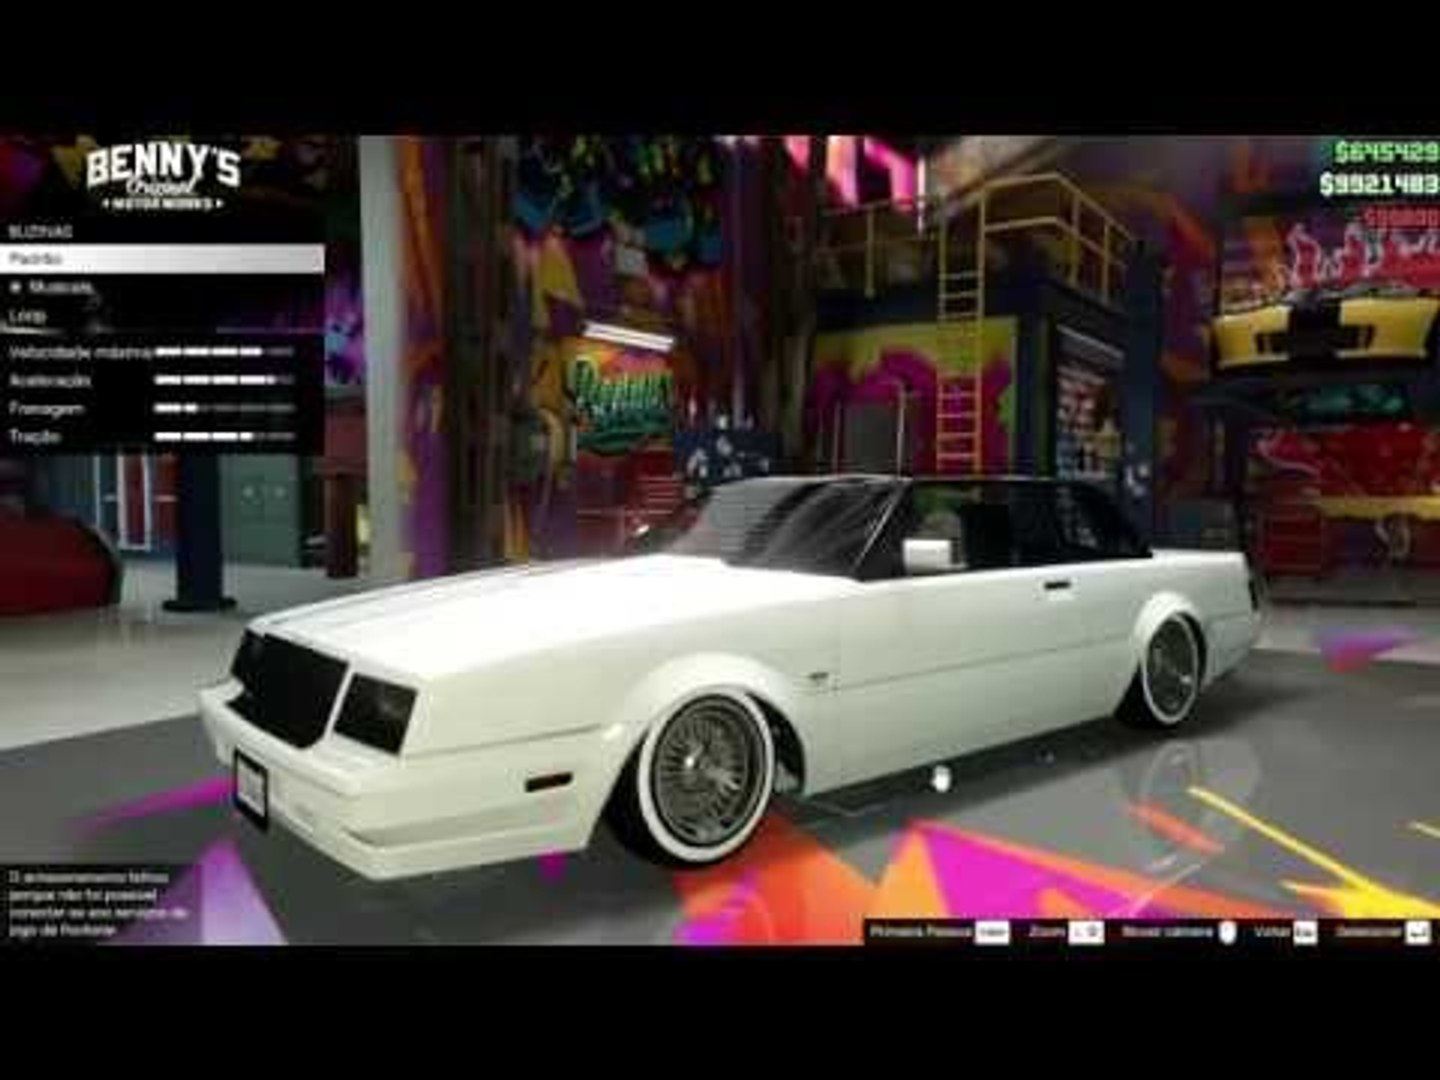 GTA 5: como tunar os seus carros no game